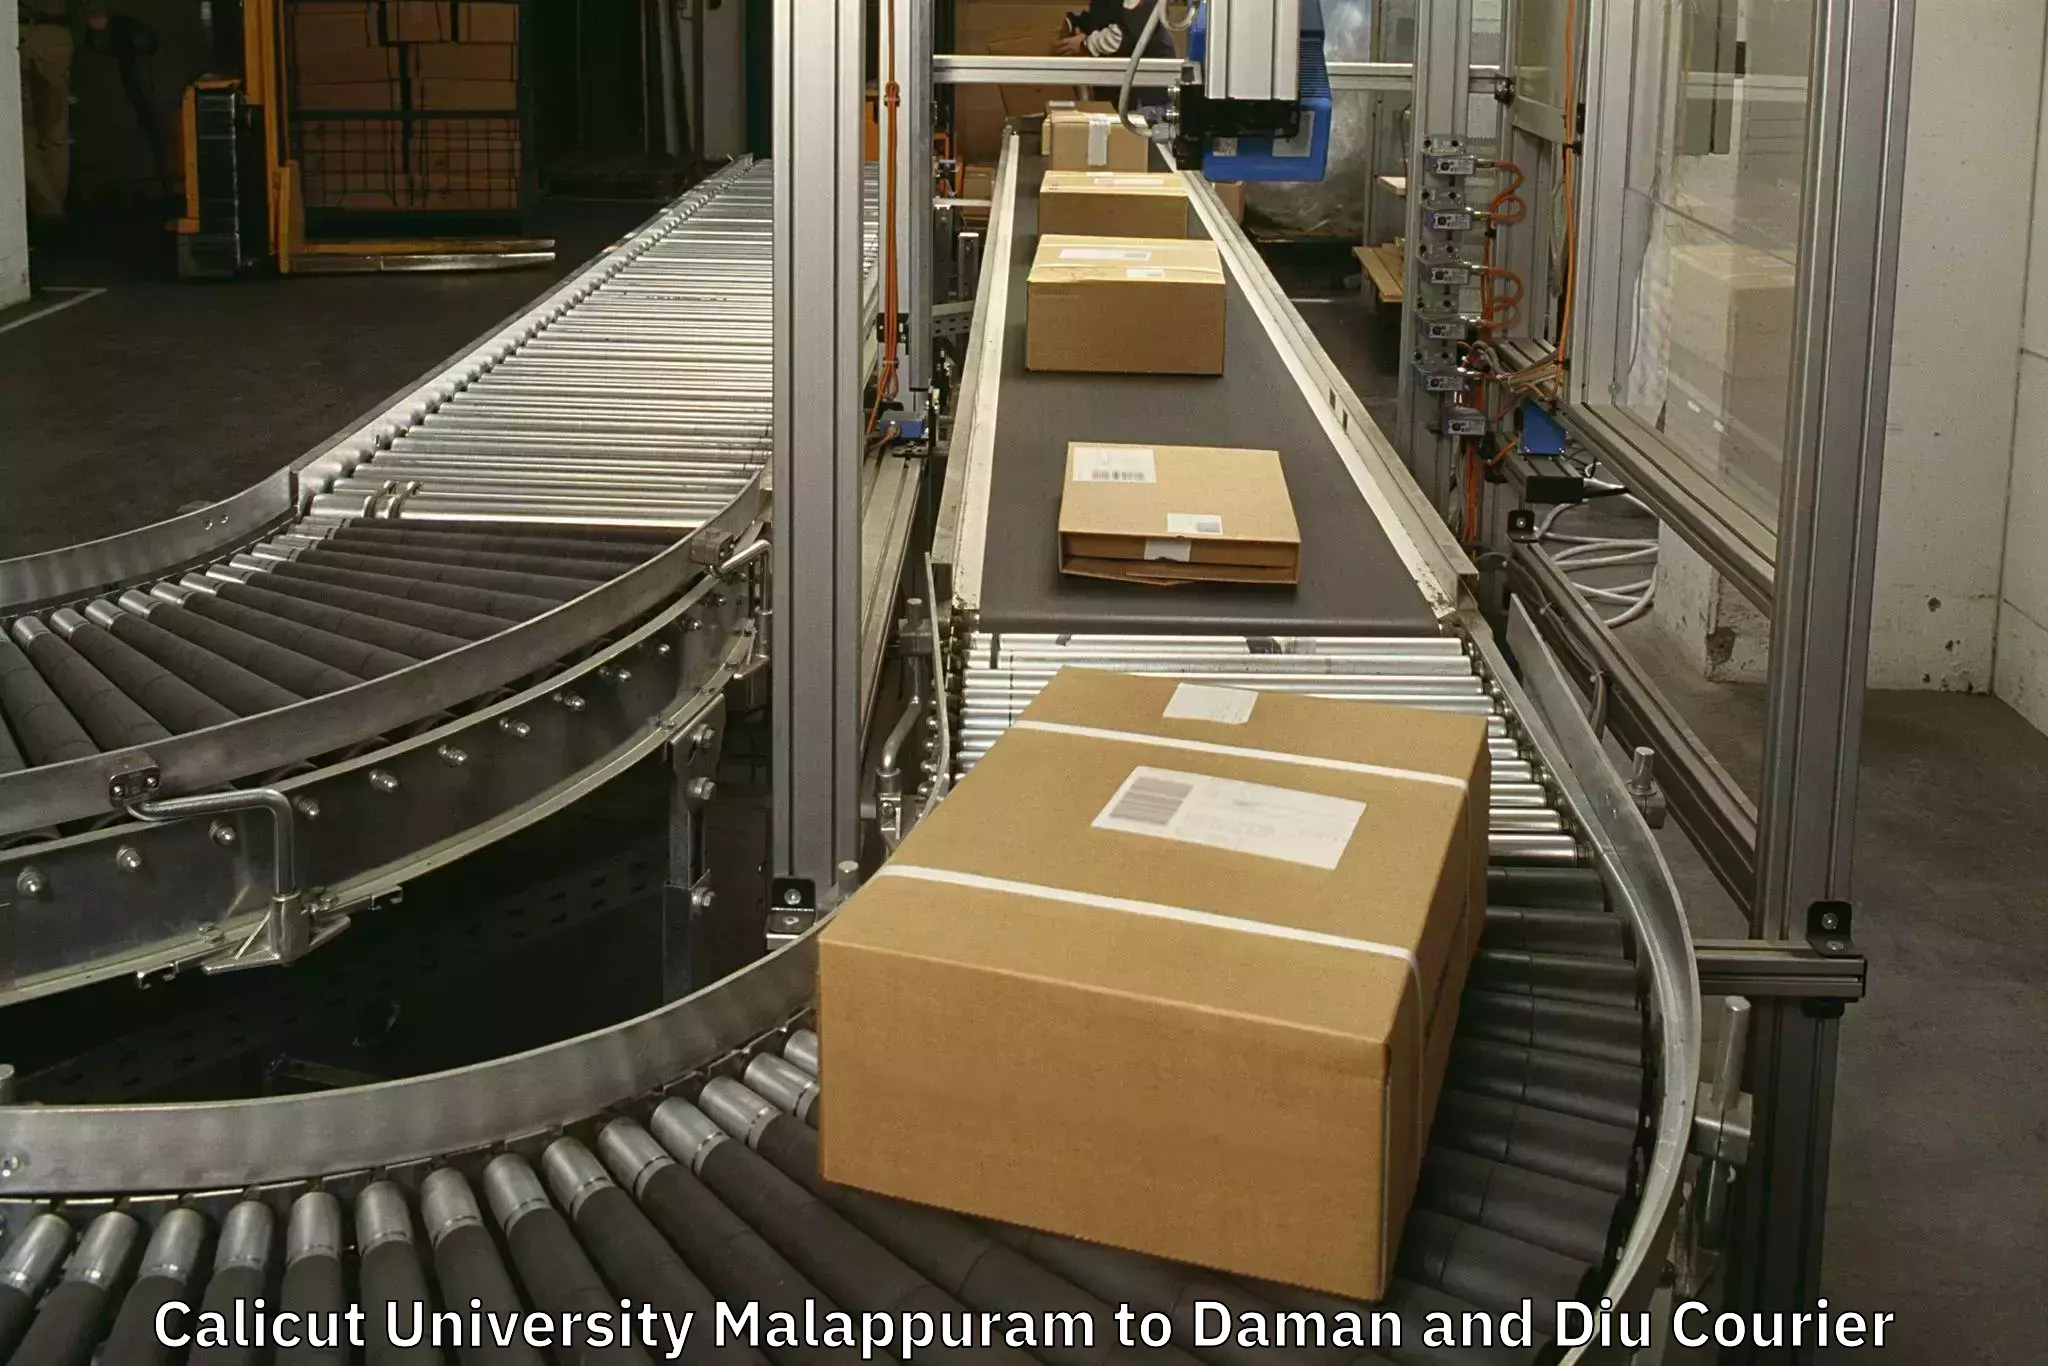 Baggage delivery technology Calicut University Malappuram to Diu